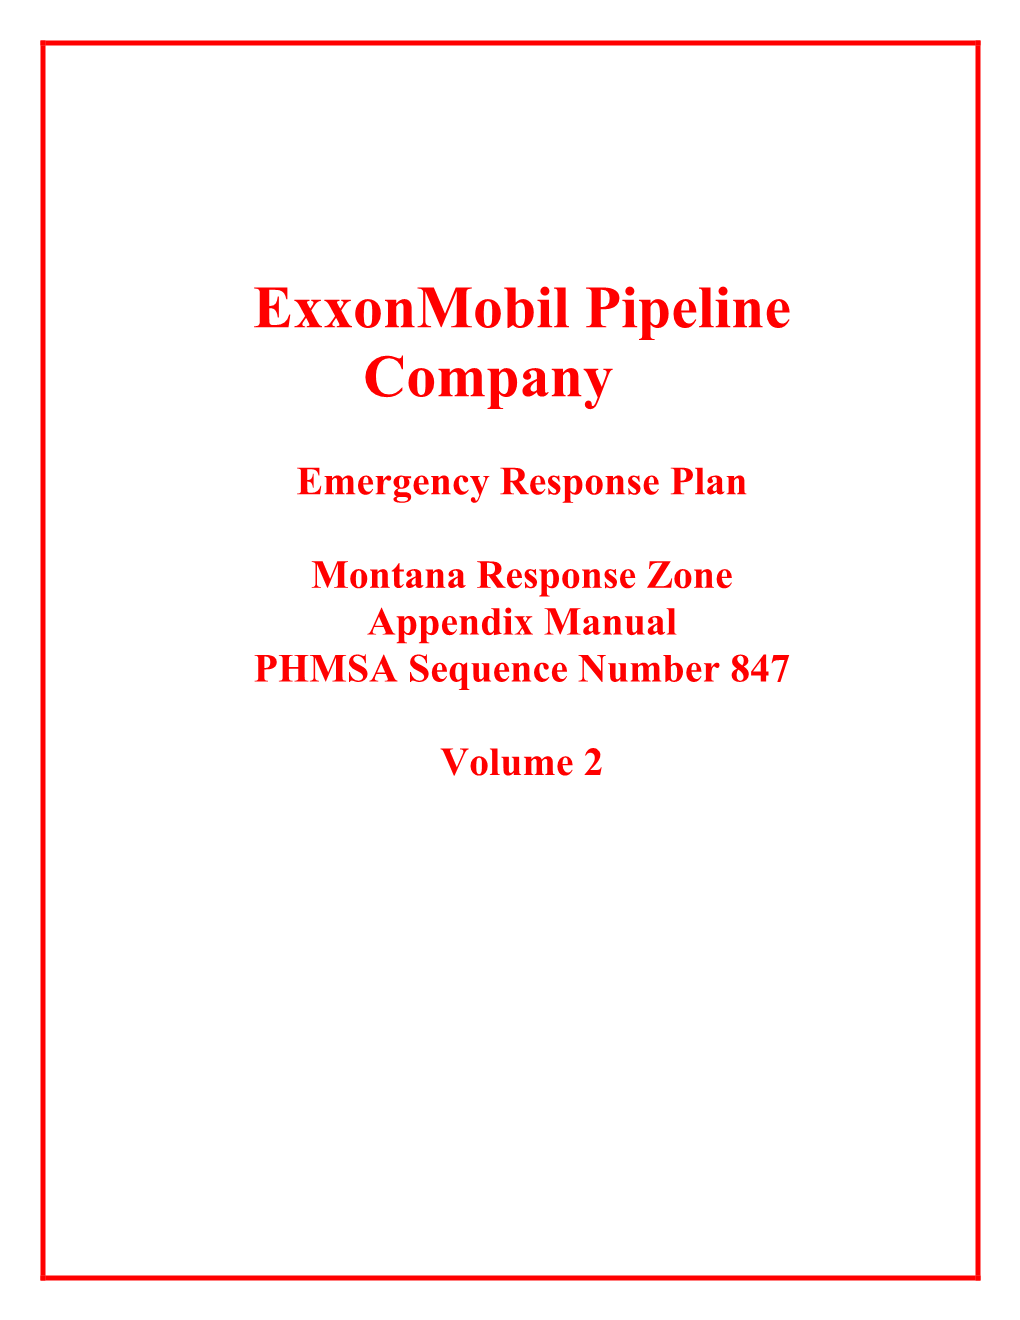 Exxonmobil Pipeline Company